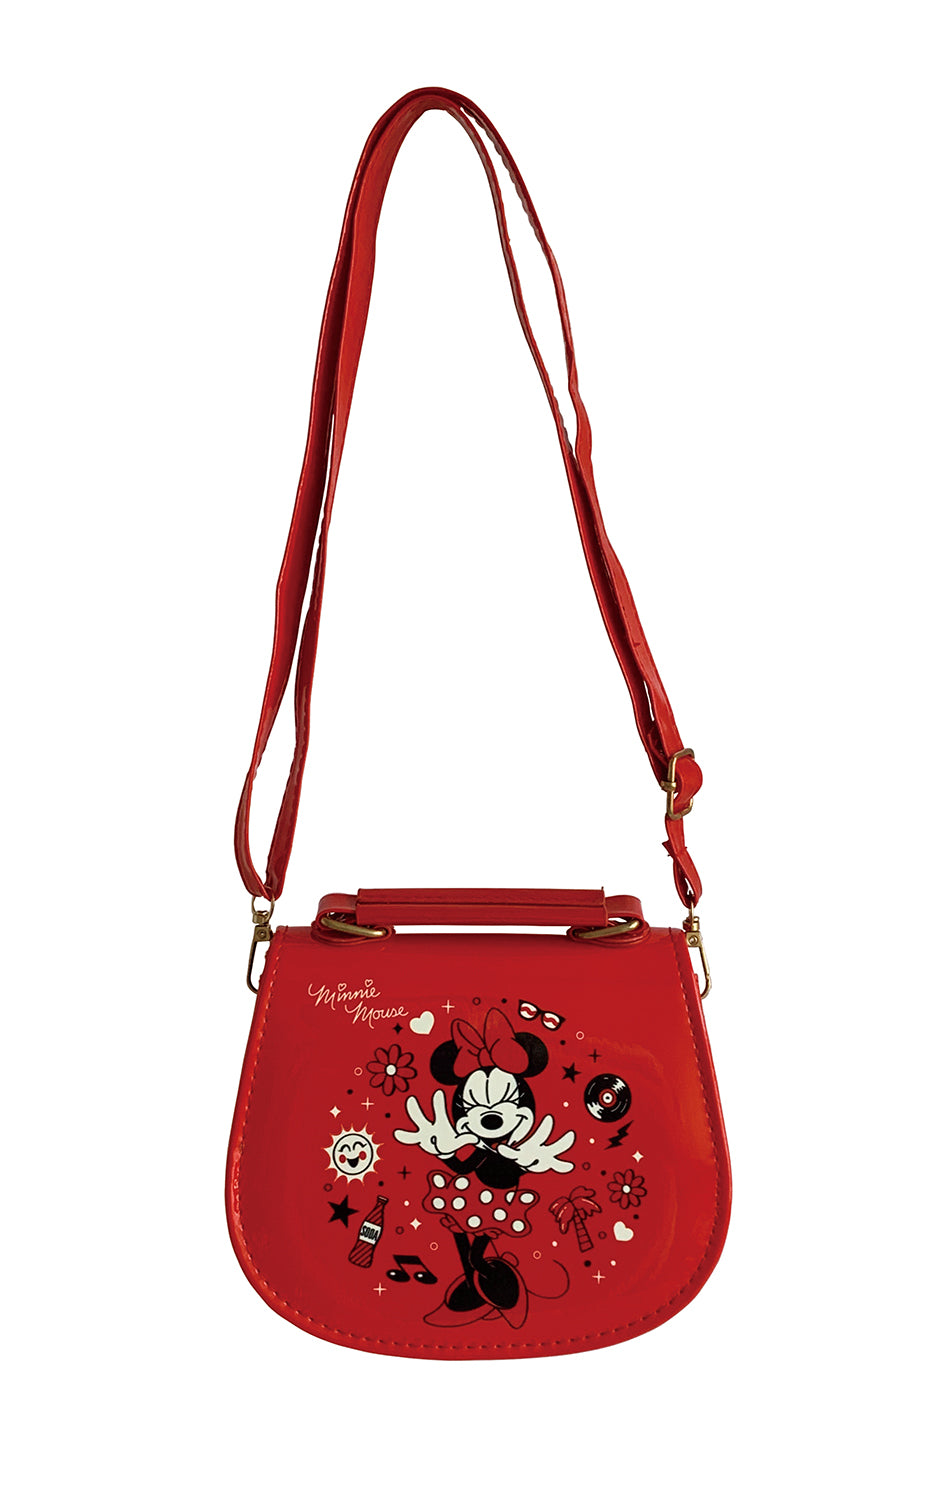 Minnie Mouse - Kids handbag DIS209 - Red-5